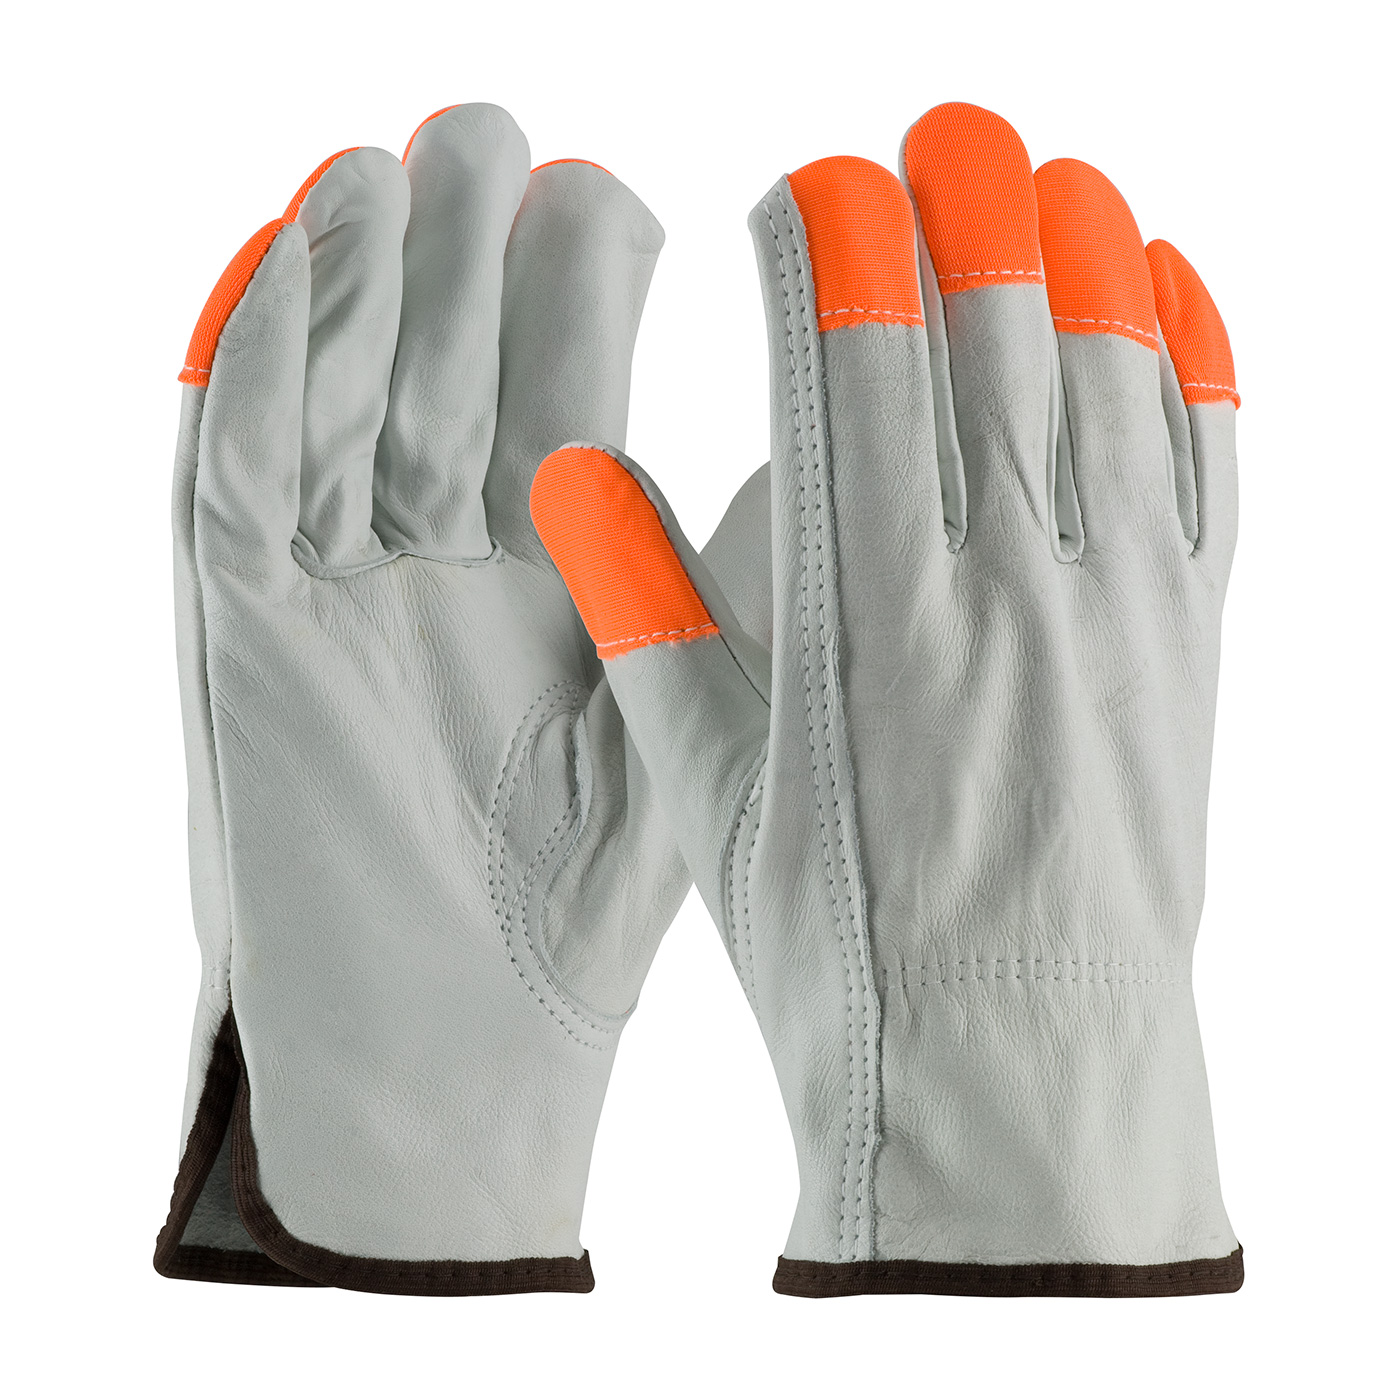 PIP 68-163HV/M Regular Grade Top Grain Cowhide Leather Drivers Glove with Hi-Vis Fingertips - Keystone Thumb - Medium PID-68 163HV M